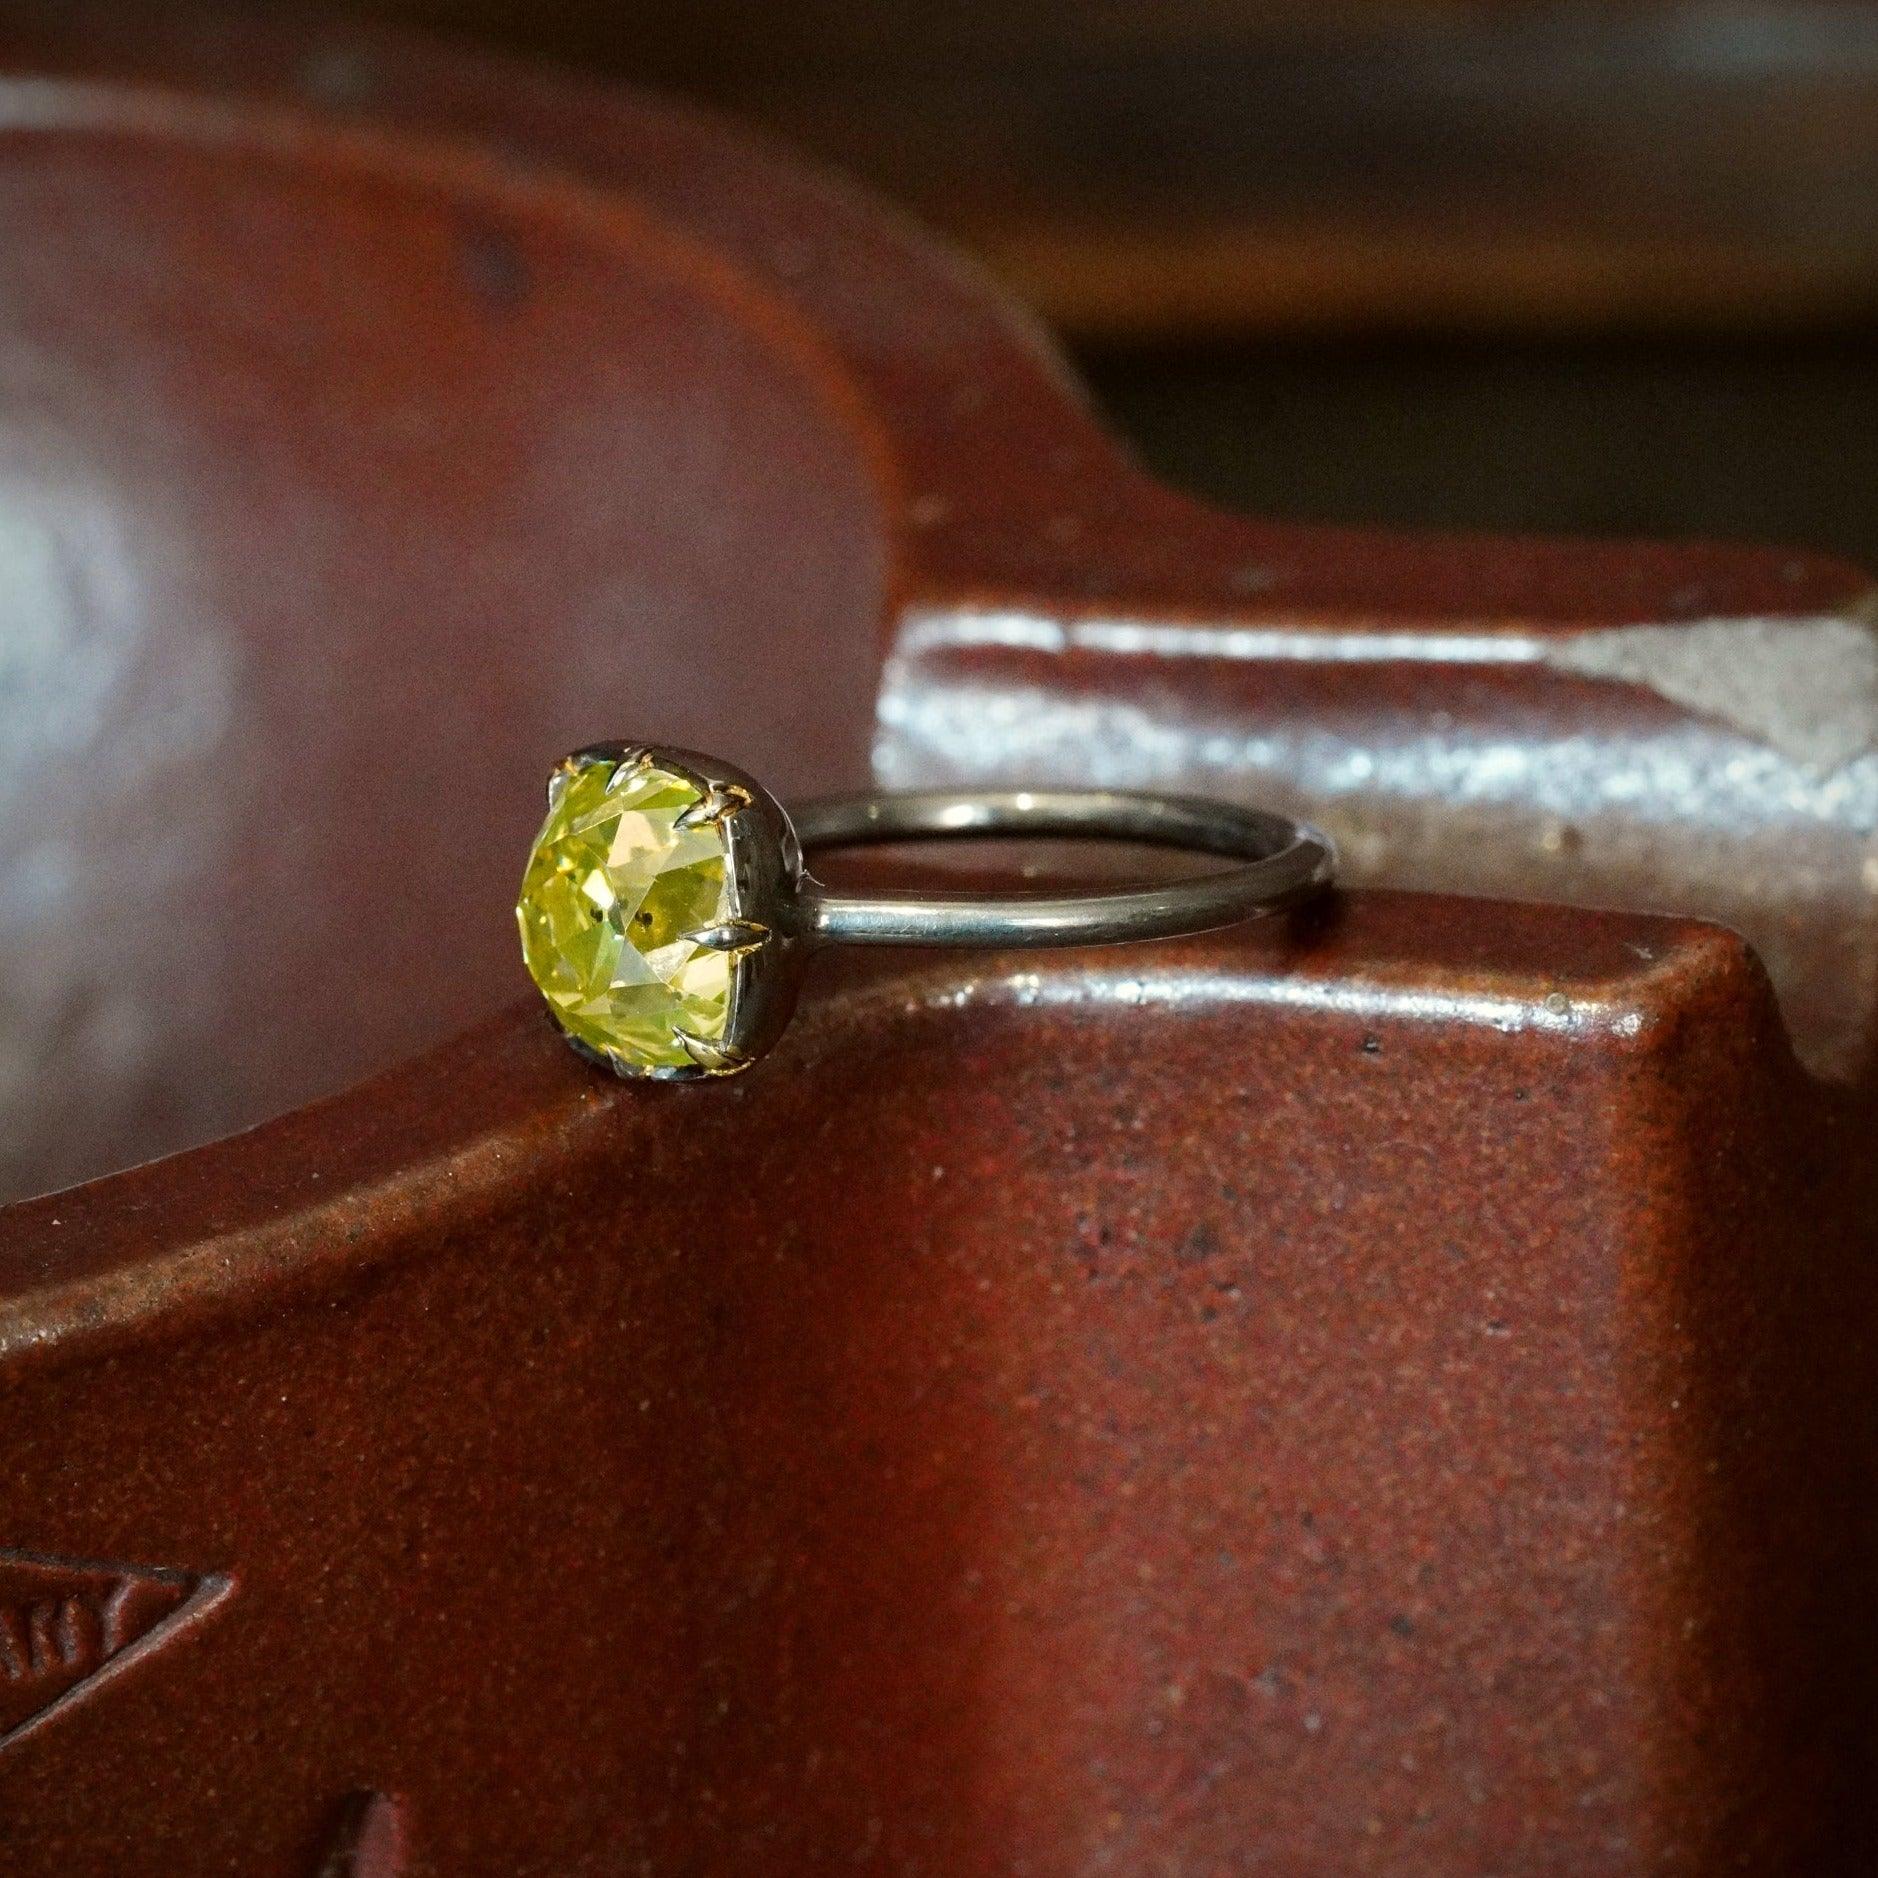 Rare and Distinctive Old Mine Diamond Ring - 4.13 Carats, Lemon-Lime, Handcrafted, Jogani